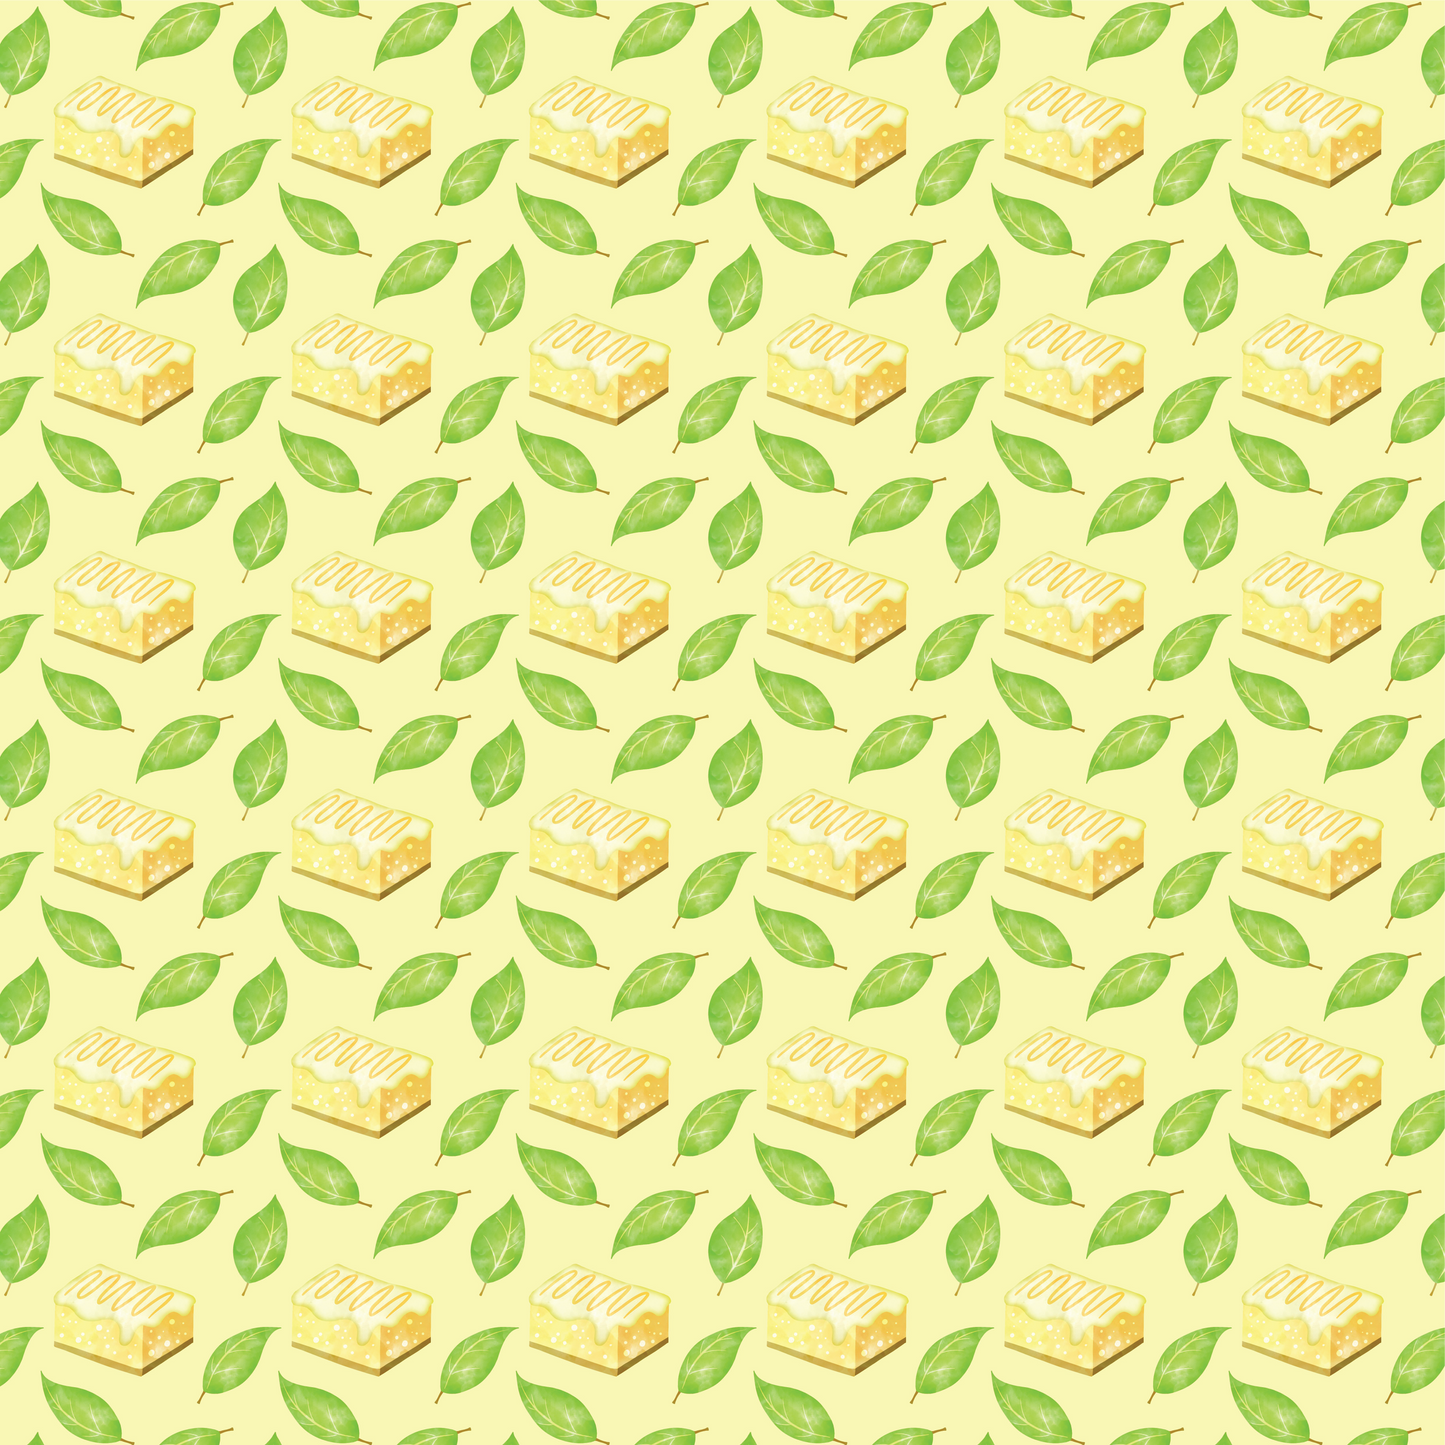 Lemonade - Lemonade Cake and Leaves Pattern 003